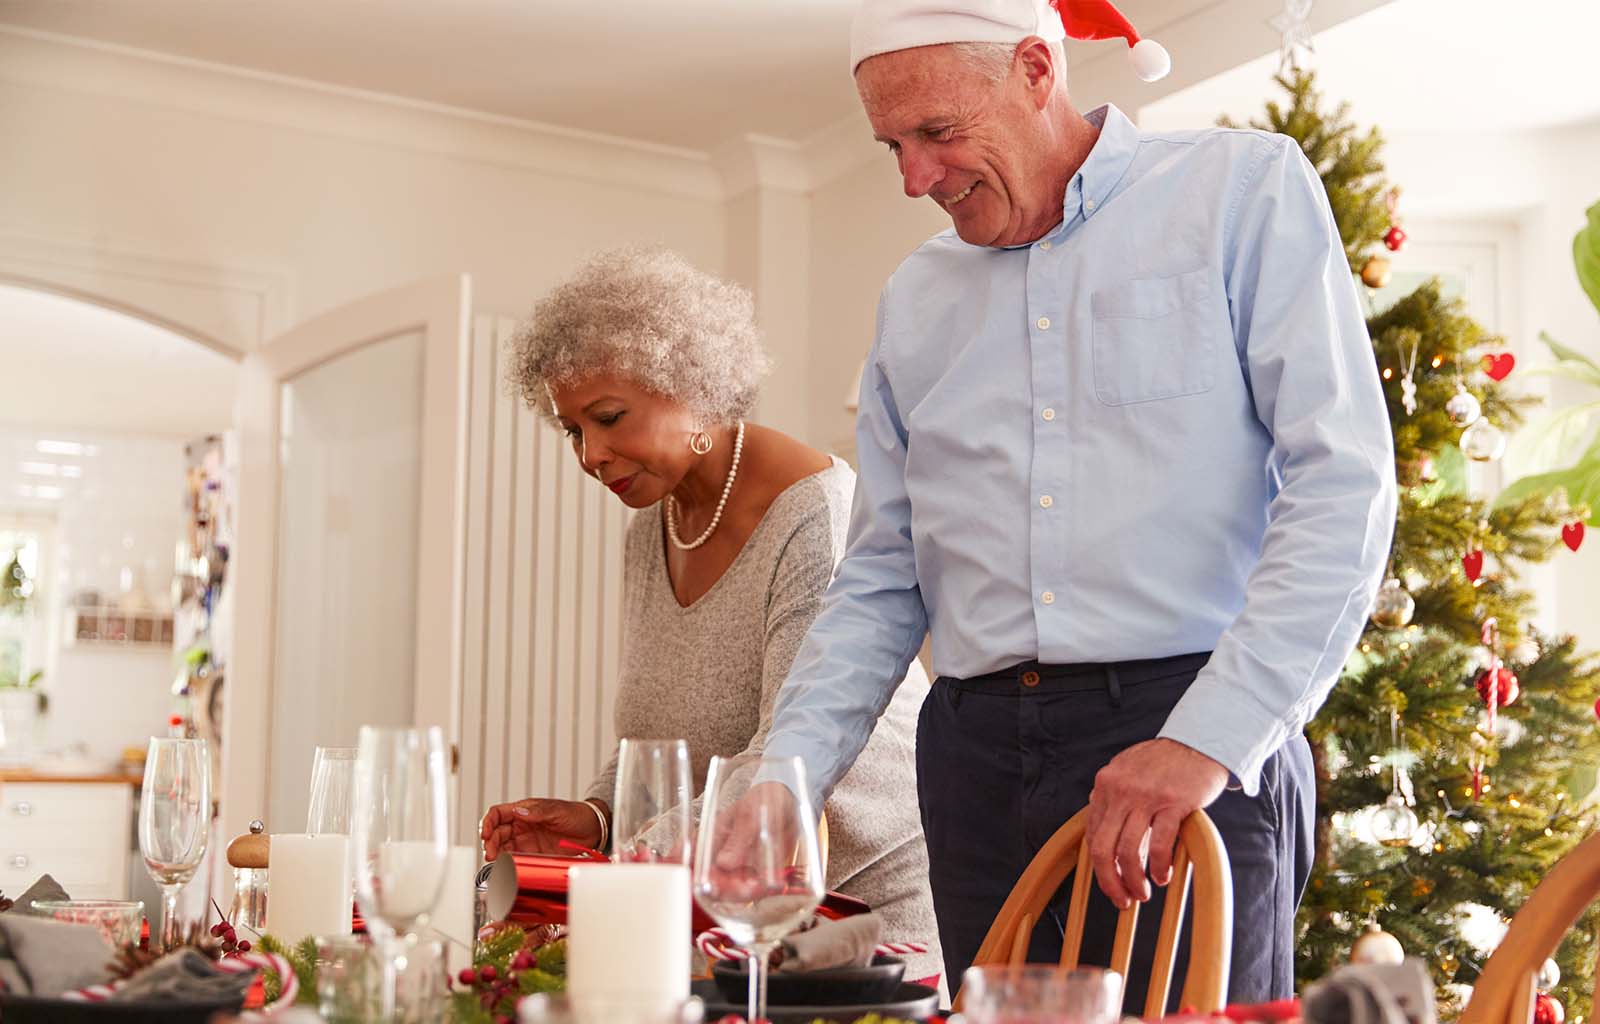 Elderly couple setting up dinner table at Christmas